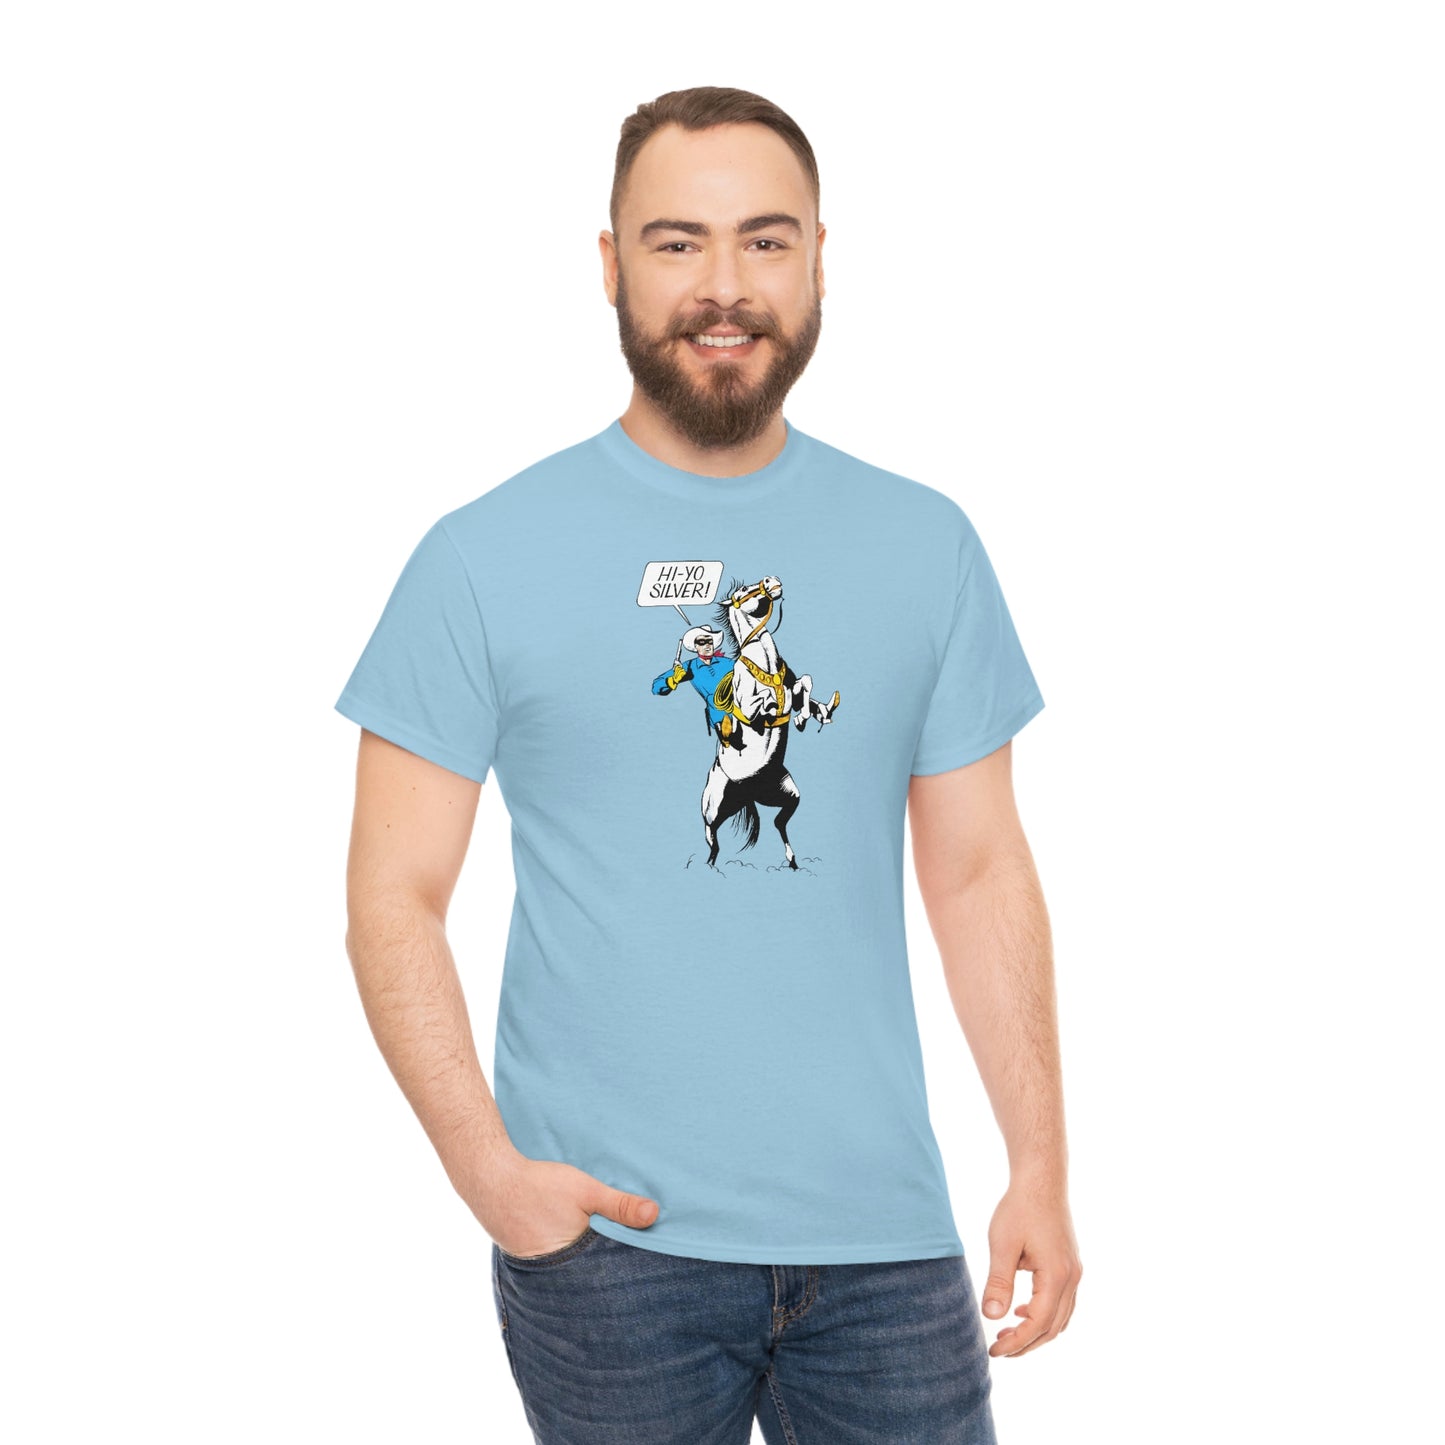 The Lone Ranger T-Shirt